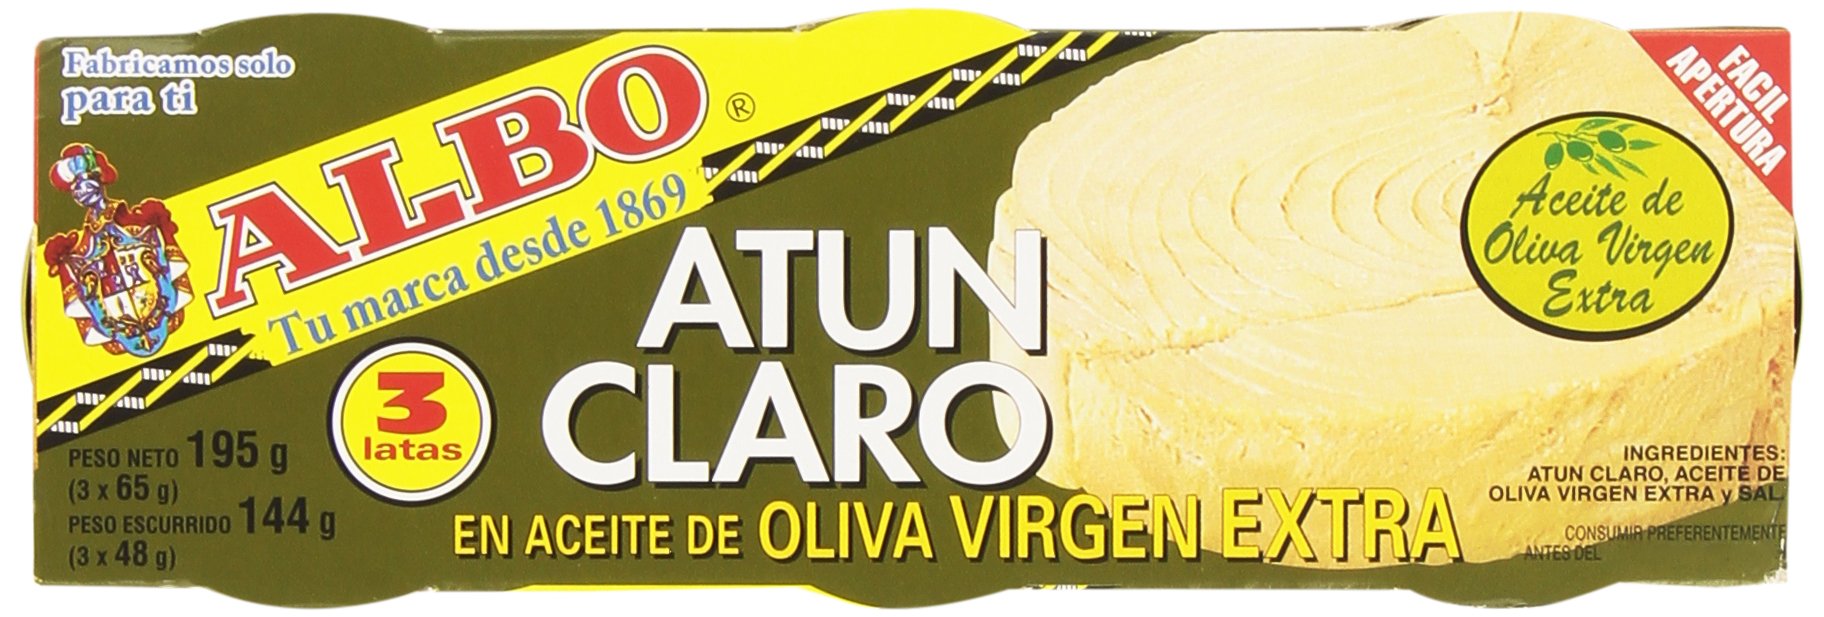 ATUN CLARO ACEITE OLIVA ALBO 3x65g.